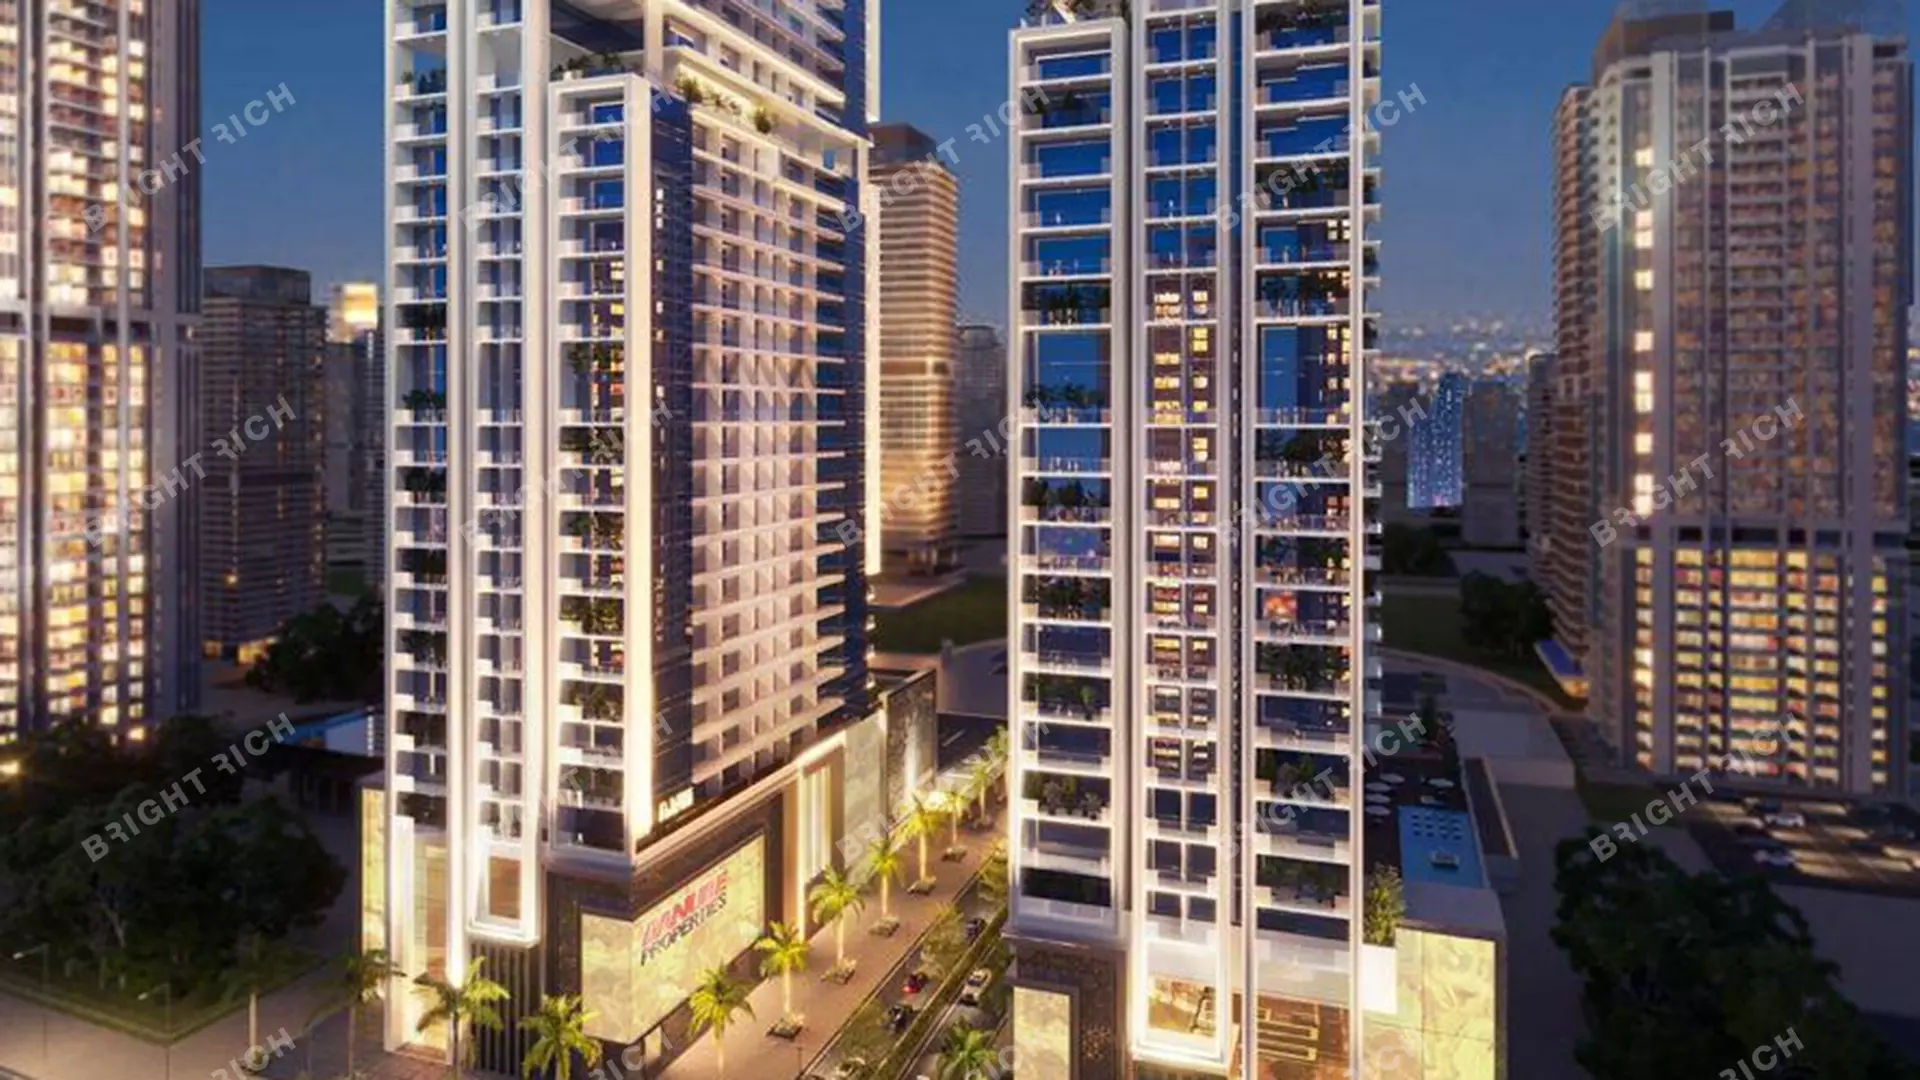 Viewz V1, apart complex in Dubai - 2